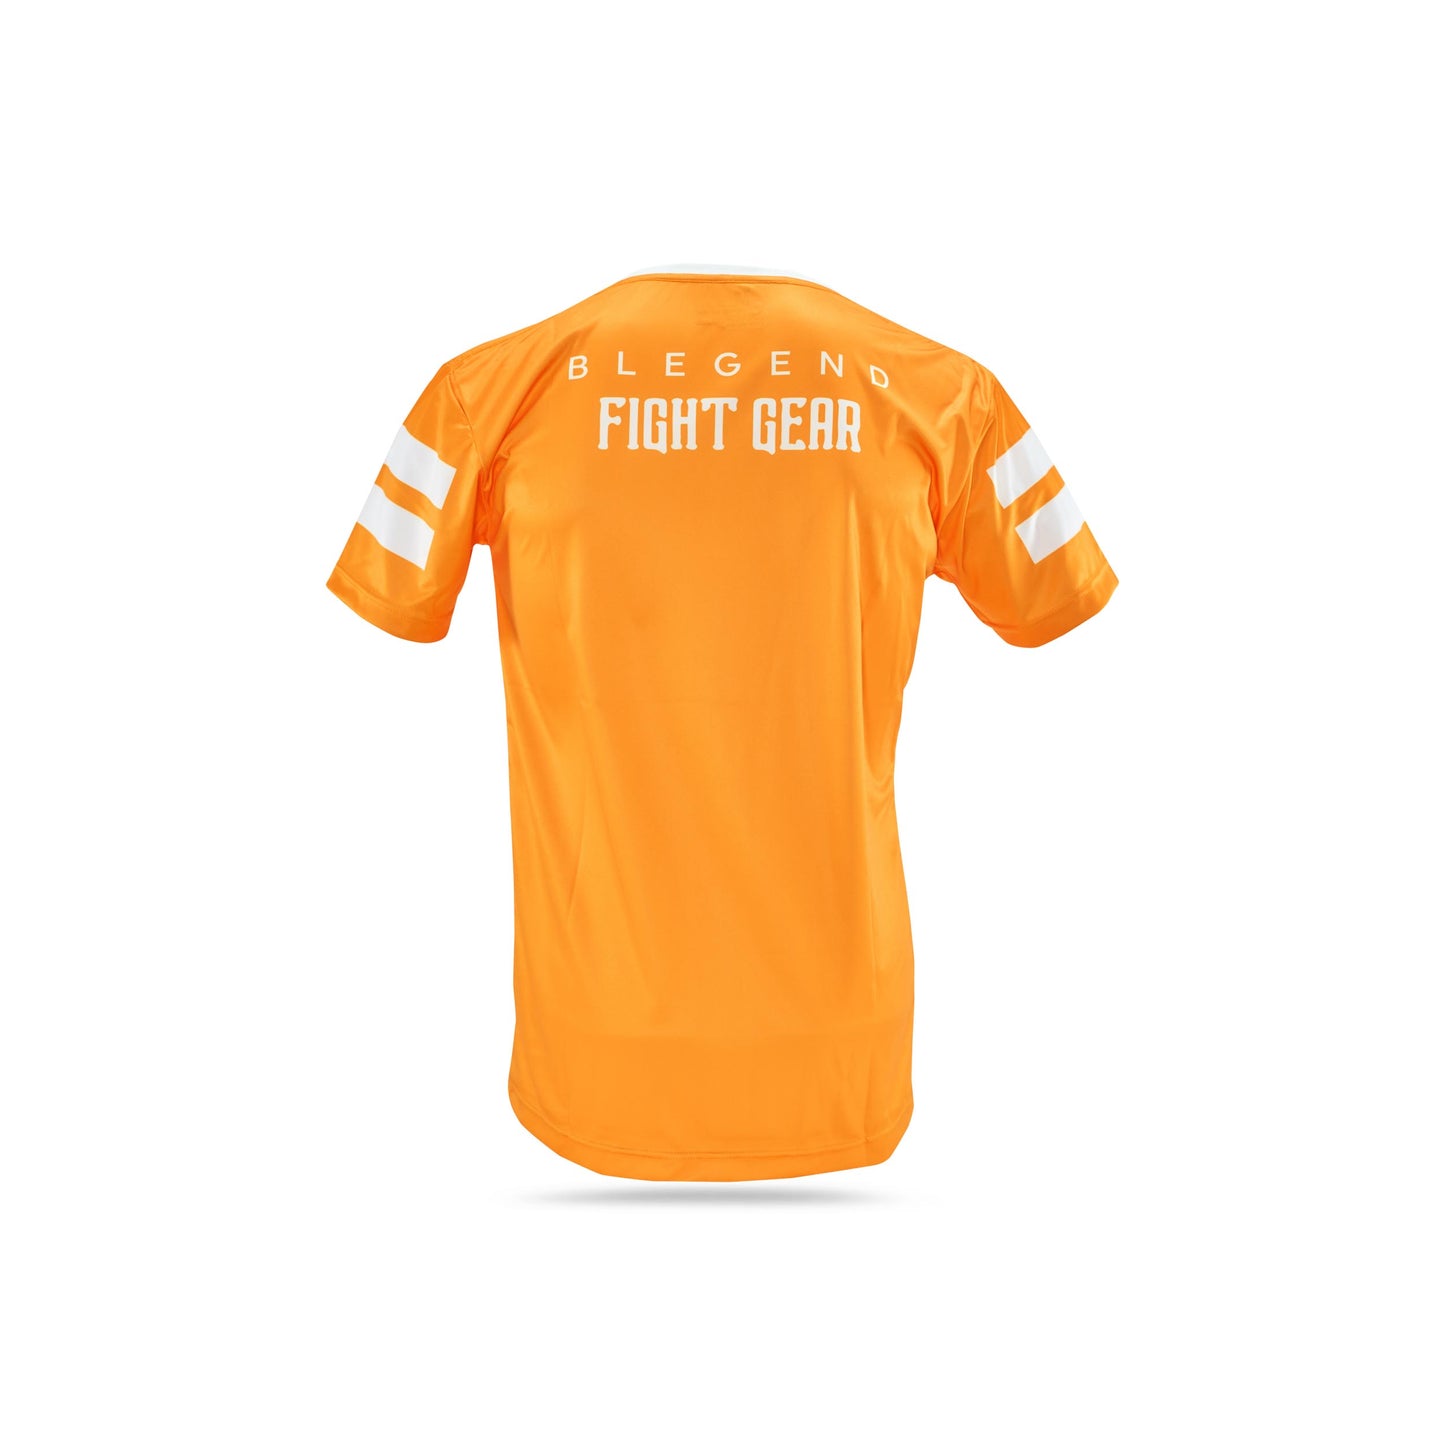 Blegend Muay Thai, Boxing T-shirt Vian